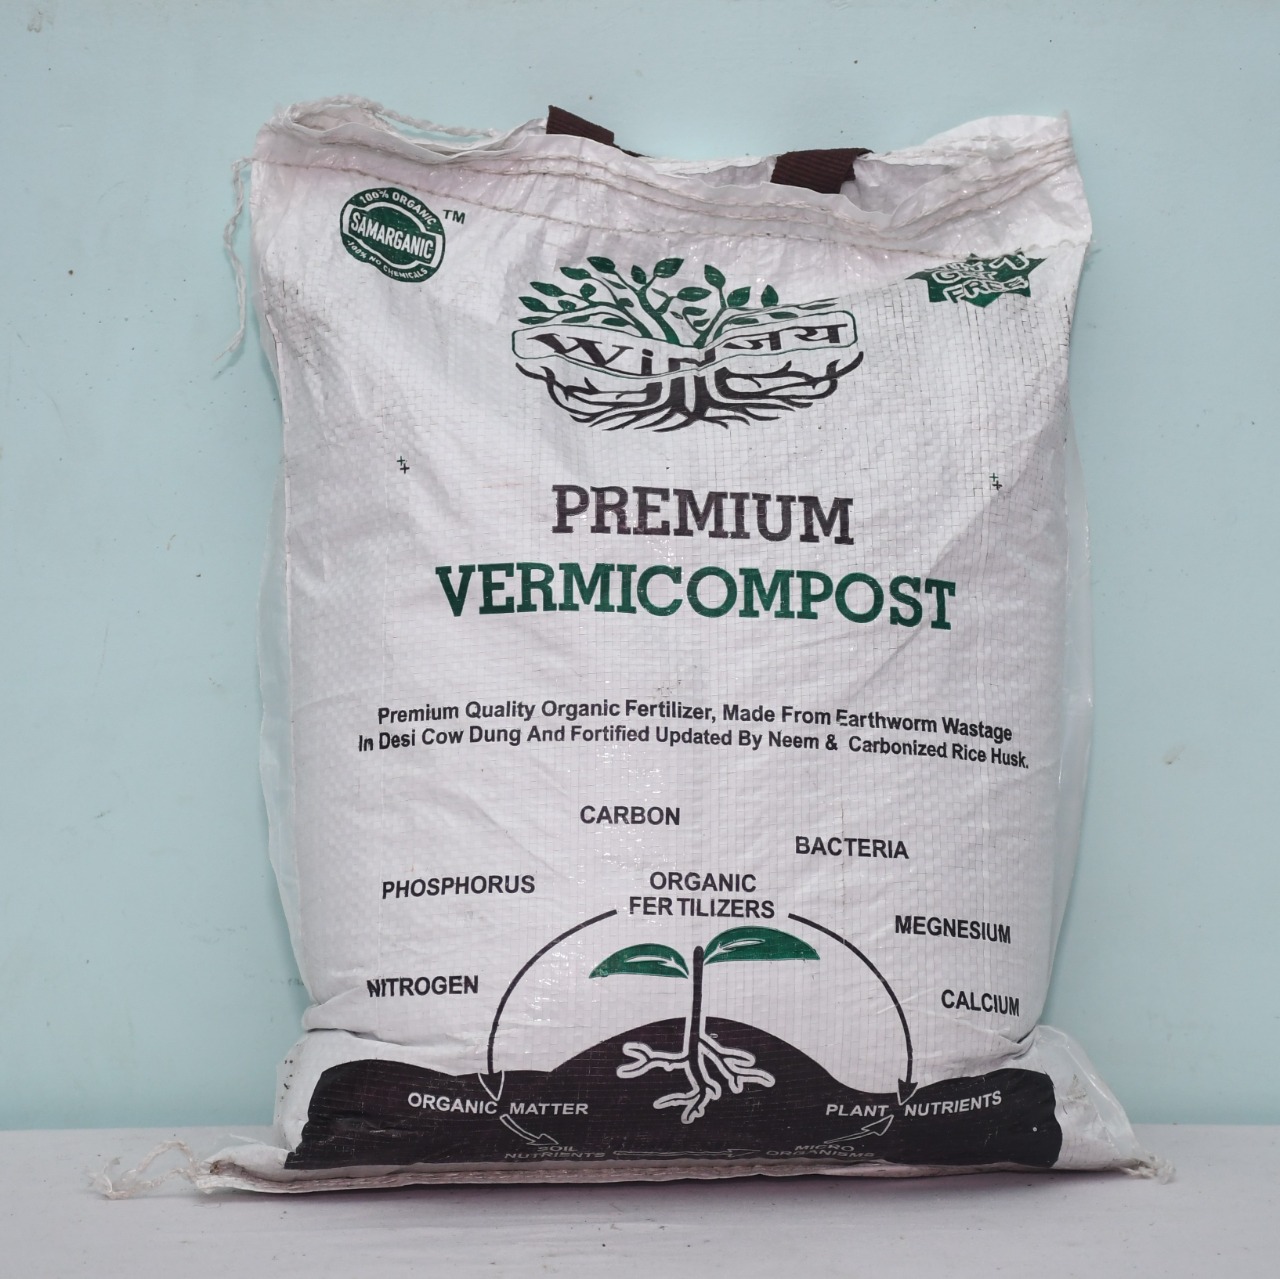 A.S. Vermi Farm - Greenbase VERMICOMPOST Bio-organic... | Facebook